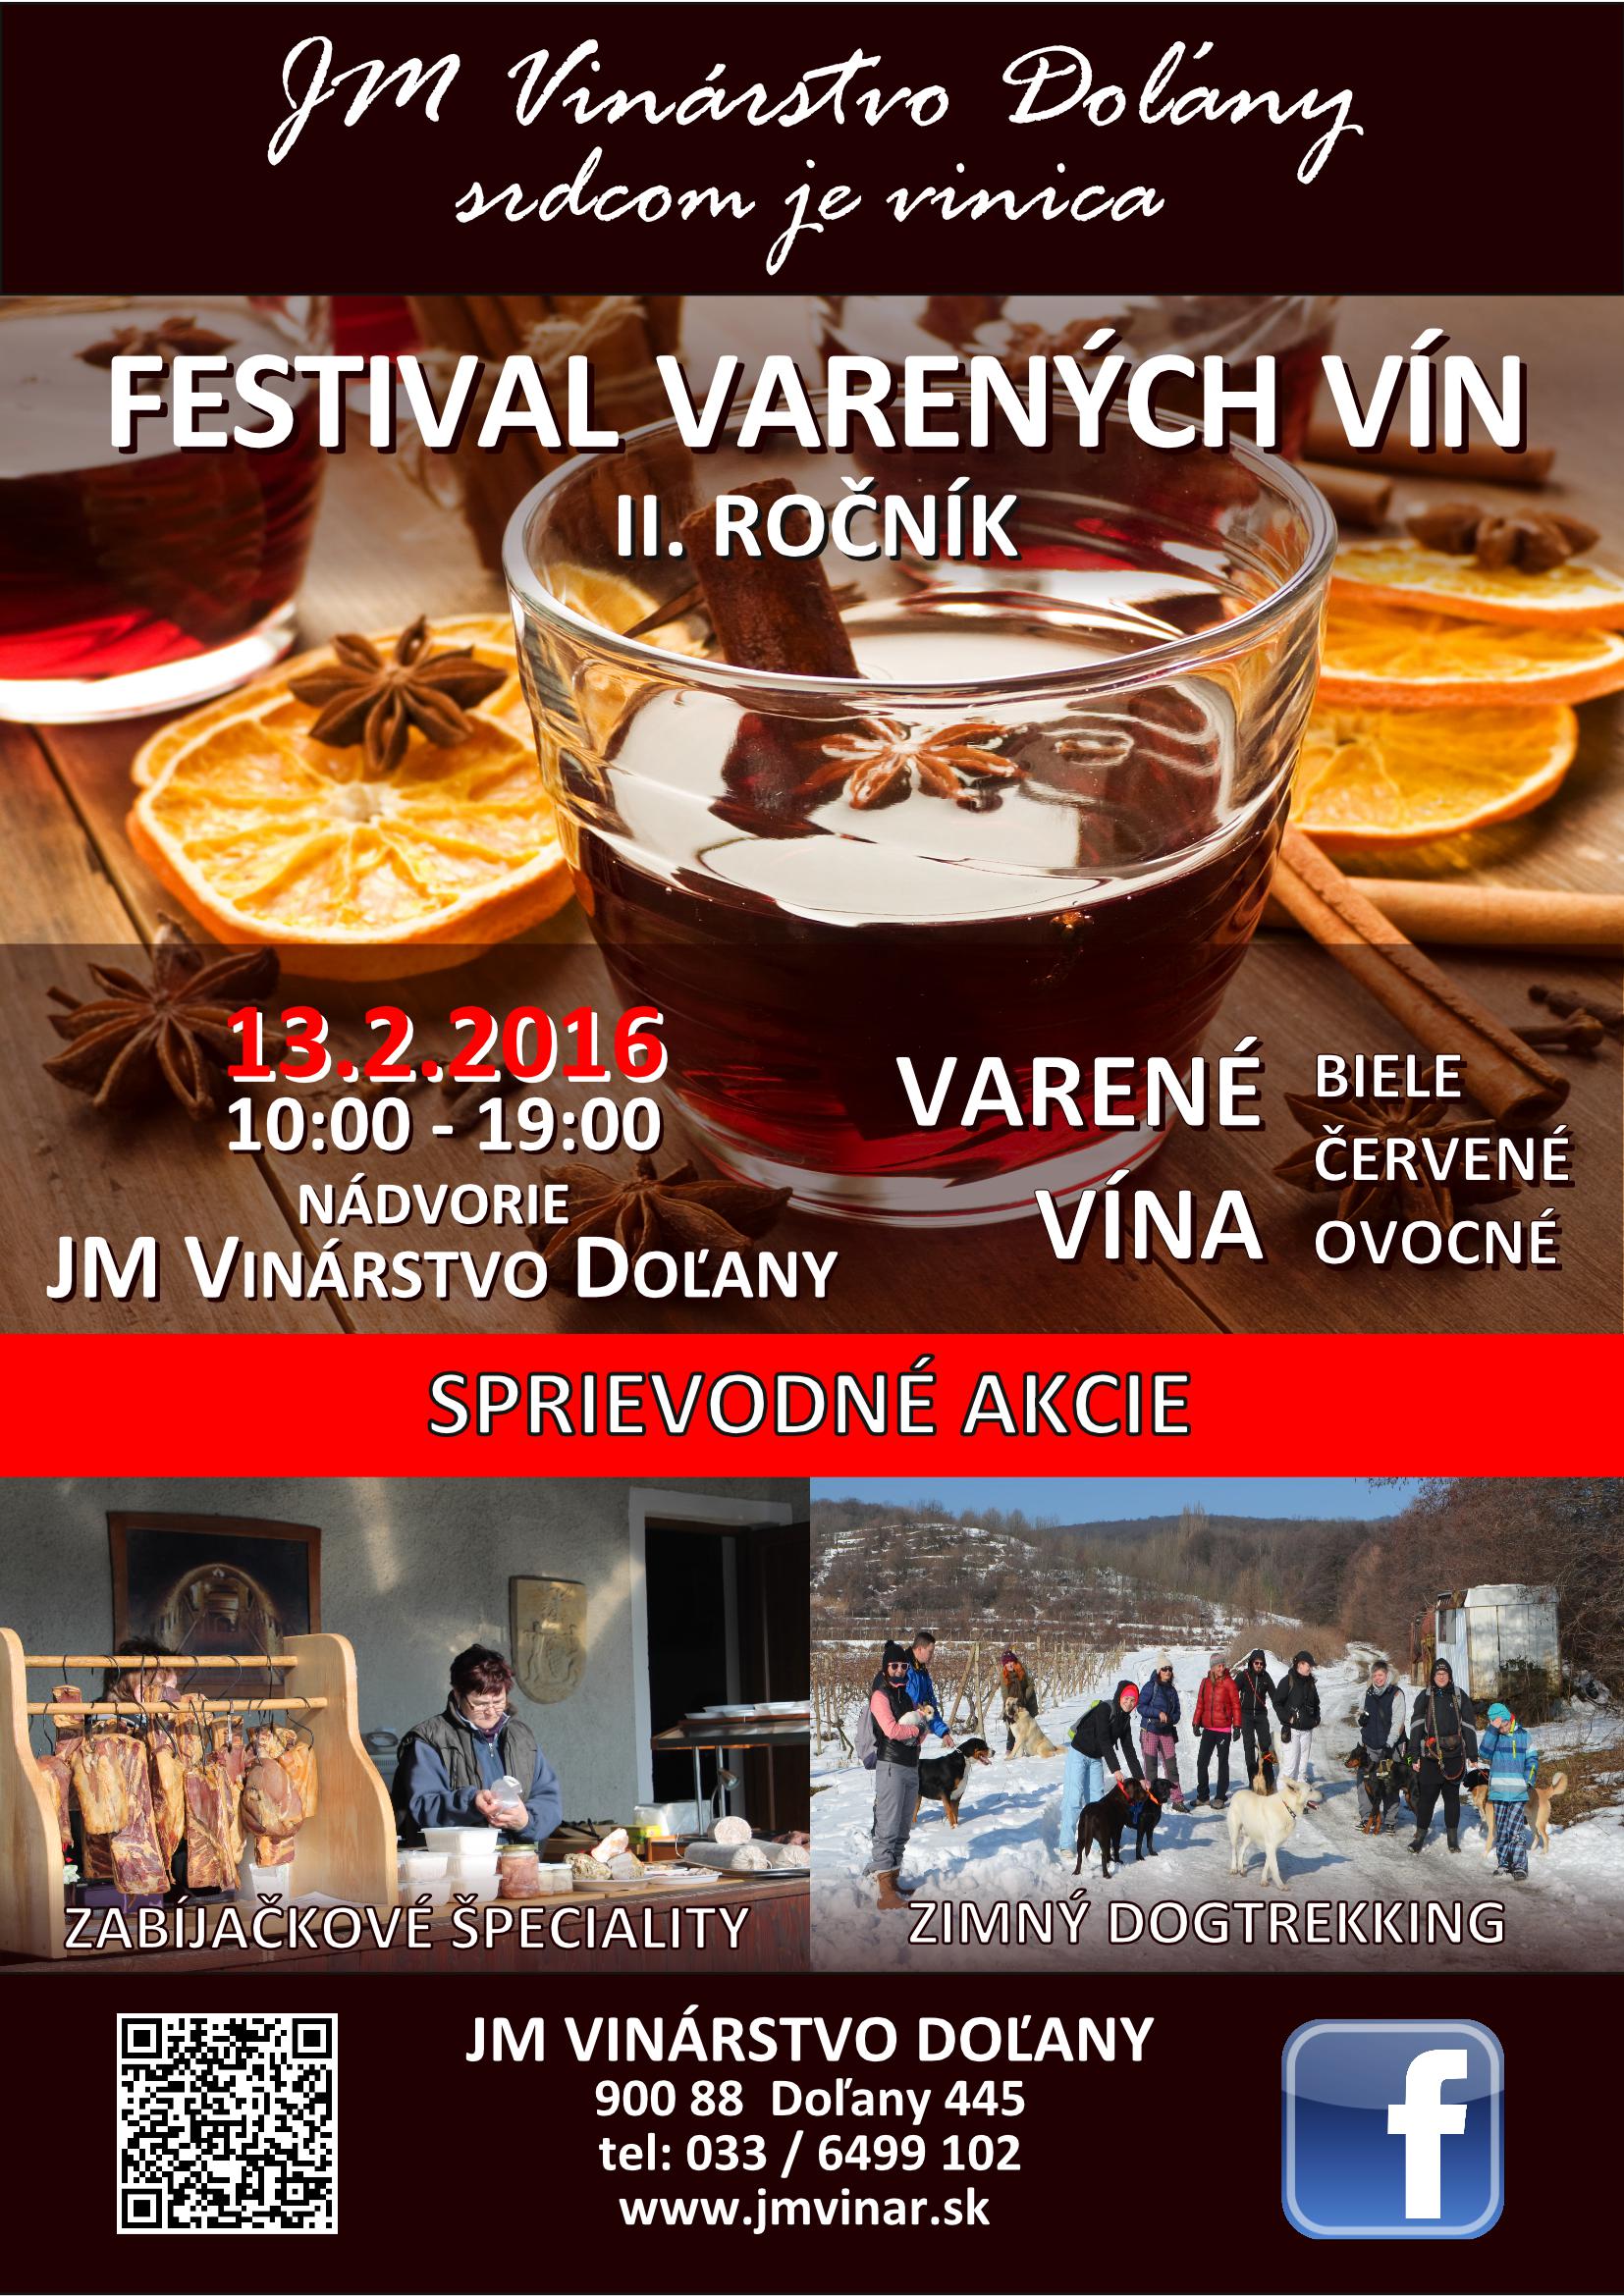 Festival varench vn Doany 2016 -  2. ronk